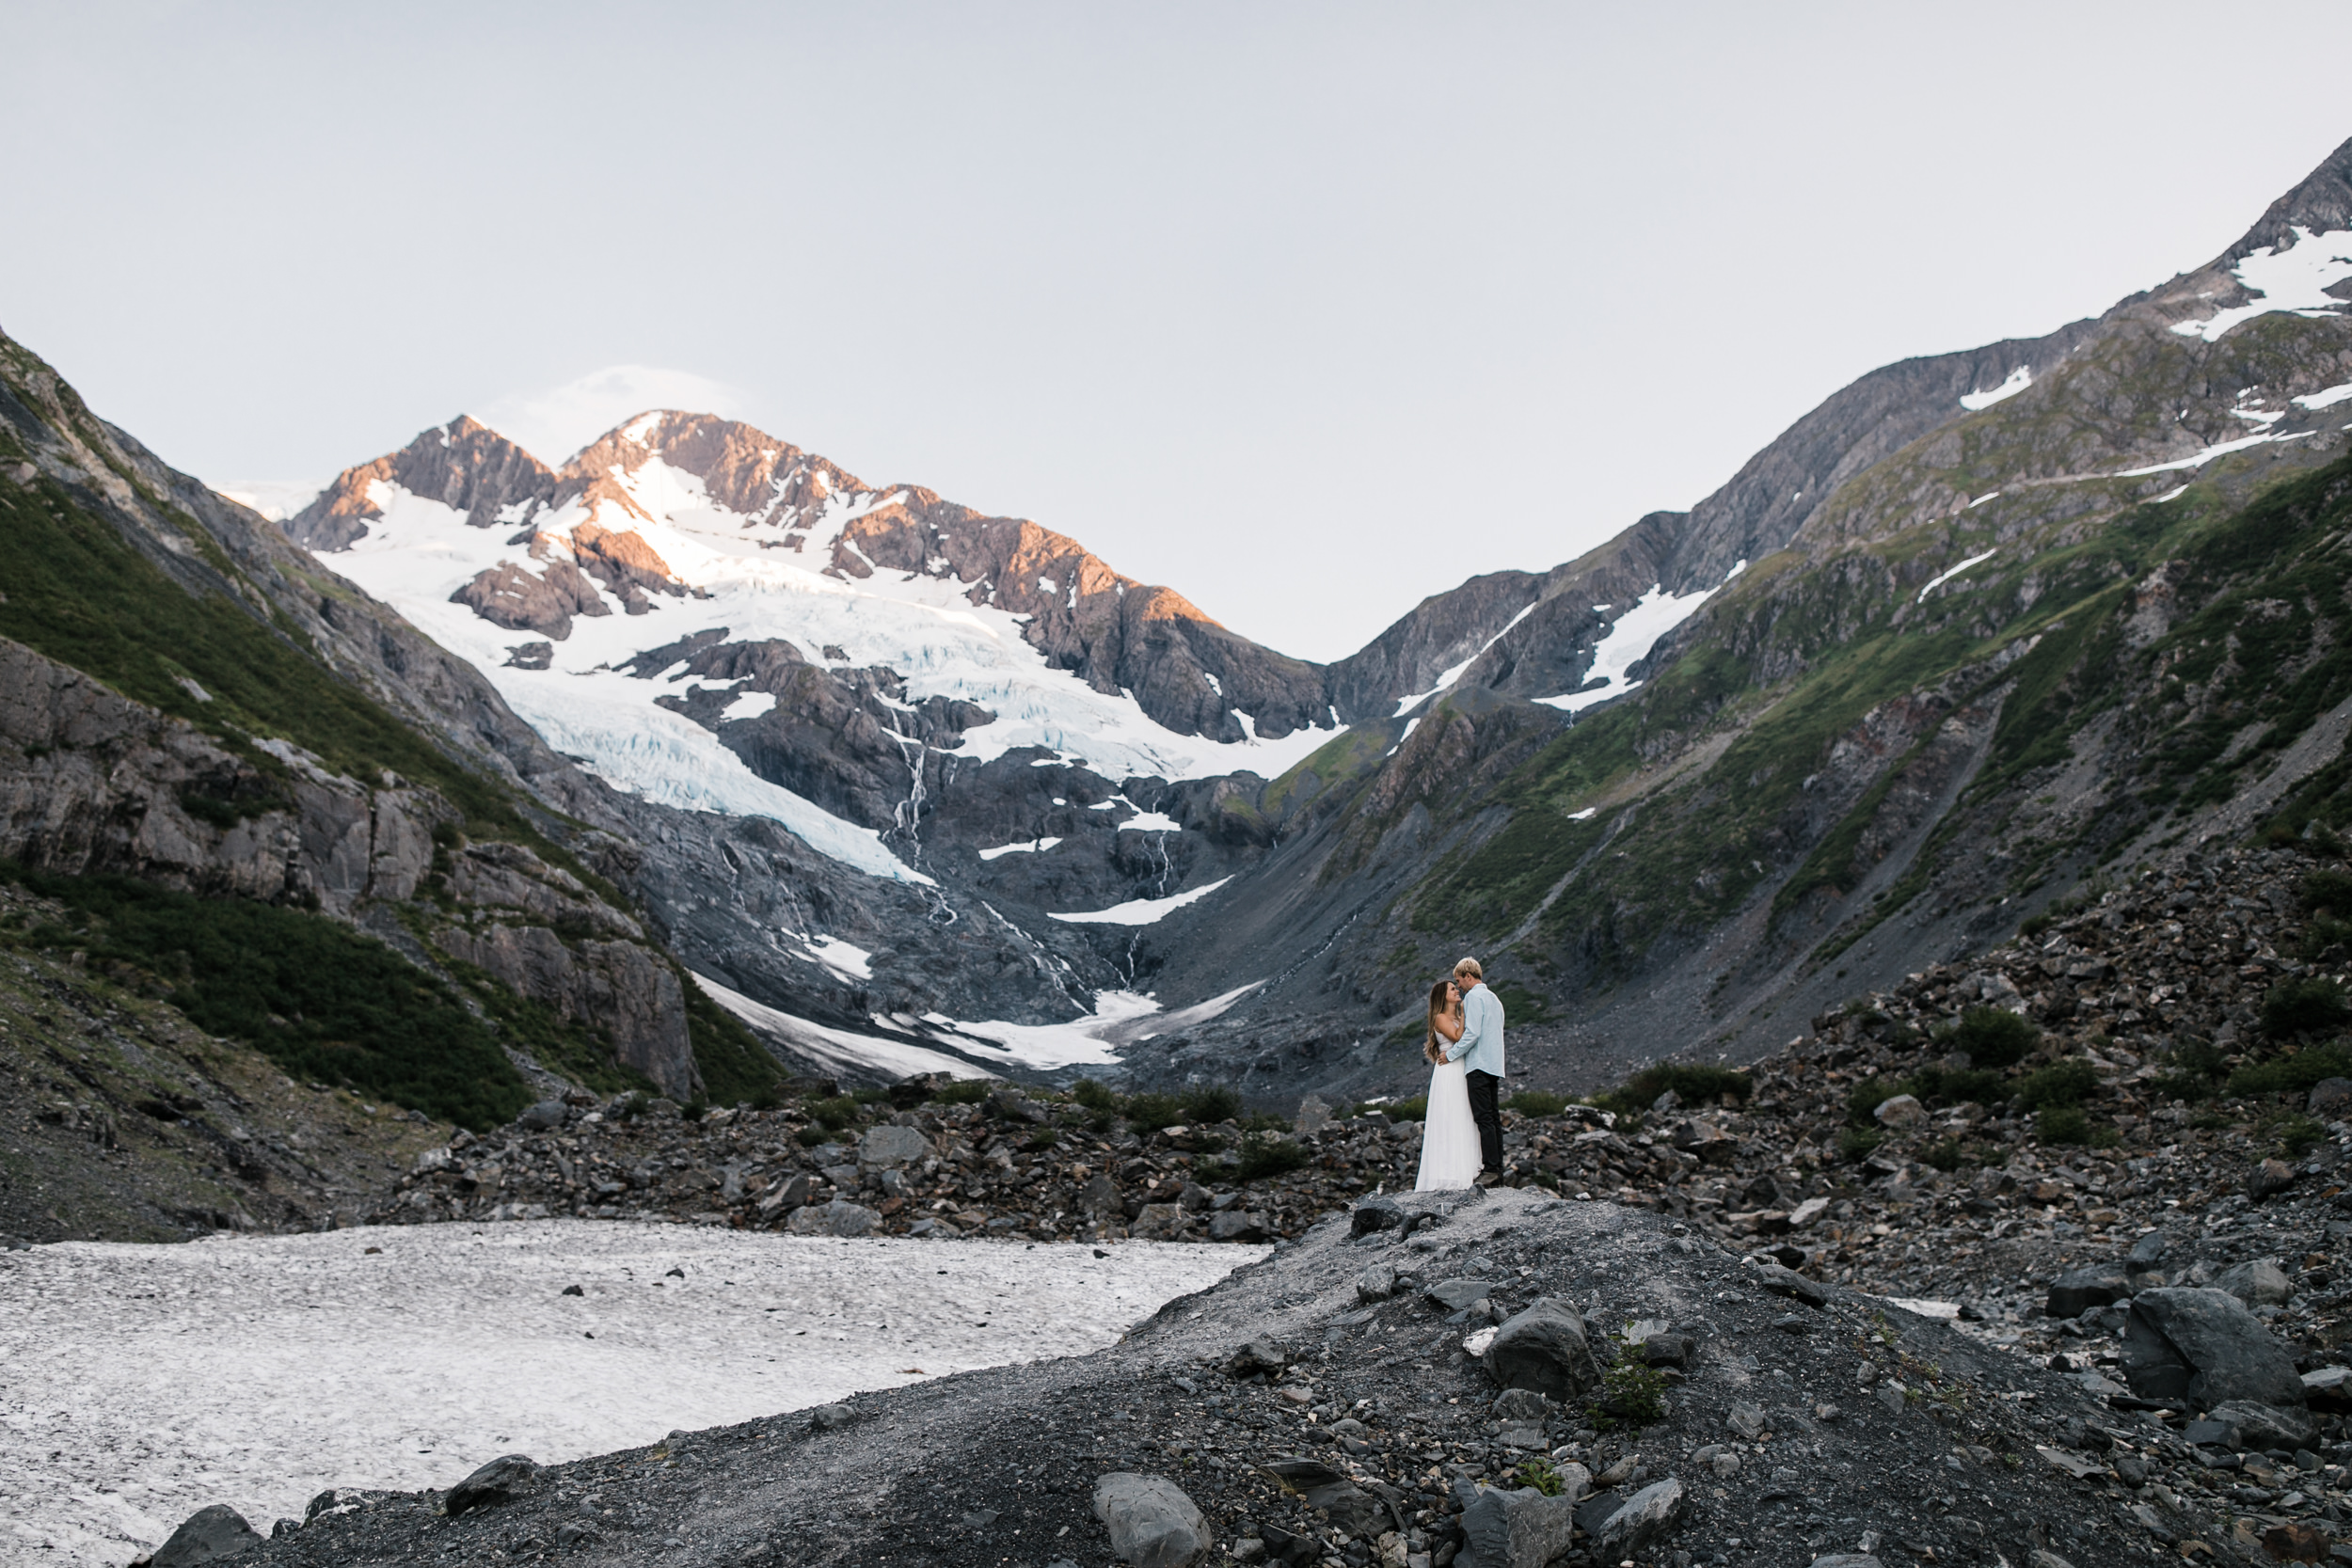 adventurous glacier engagement session near girdwood | alaska elopement photographer | glacier wedding inspiration | the hearnes adventure photography | www.thehearnes.com